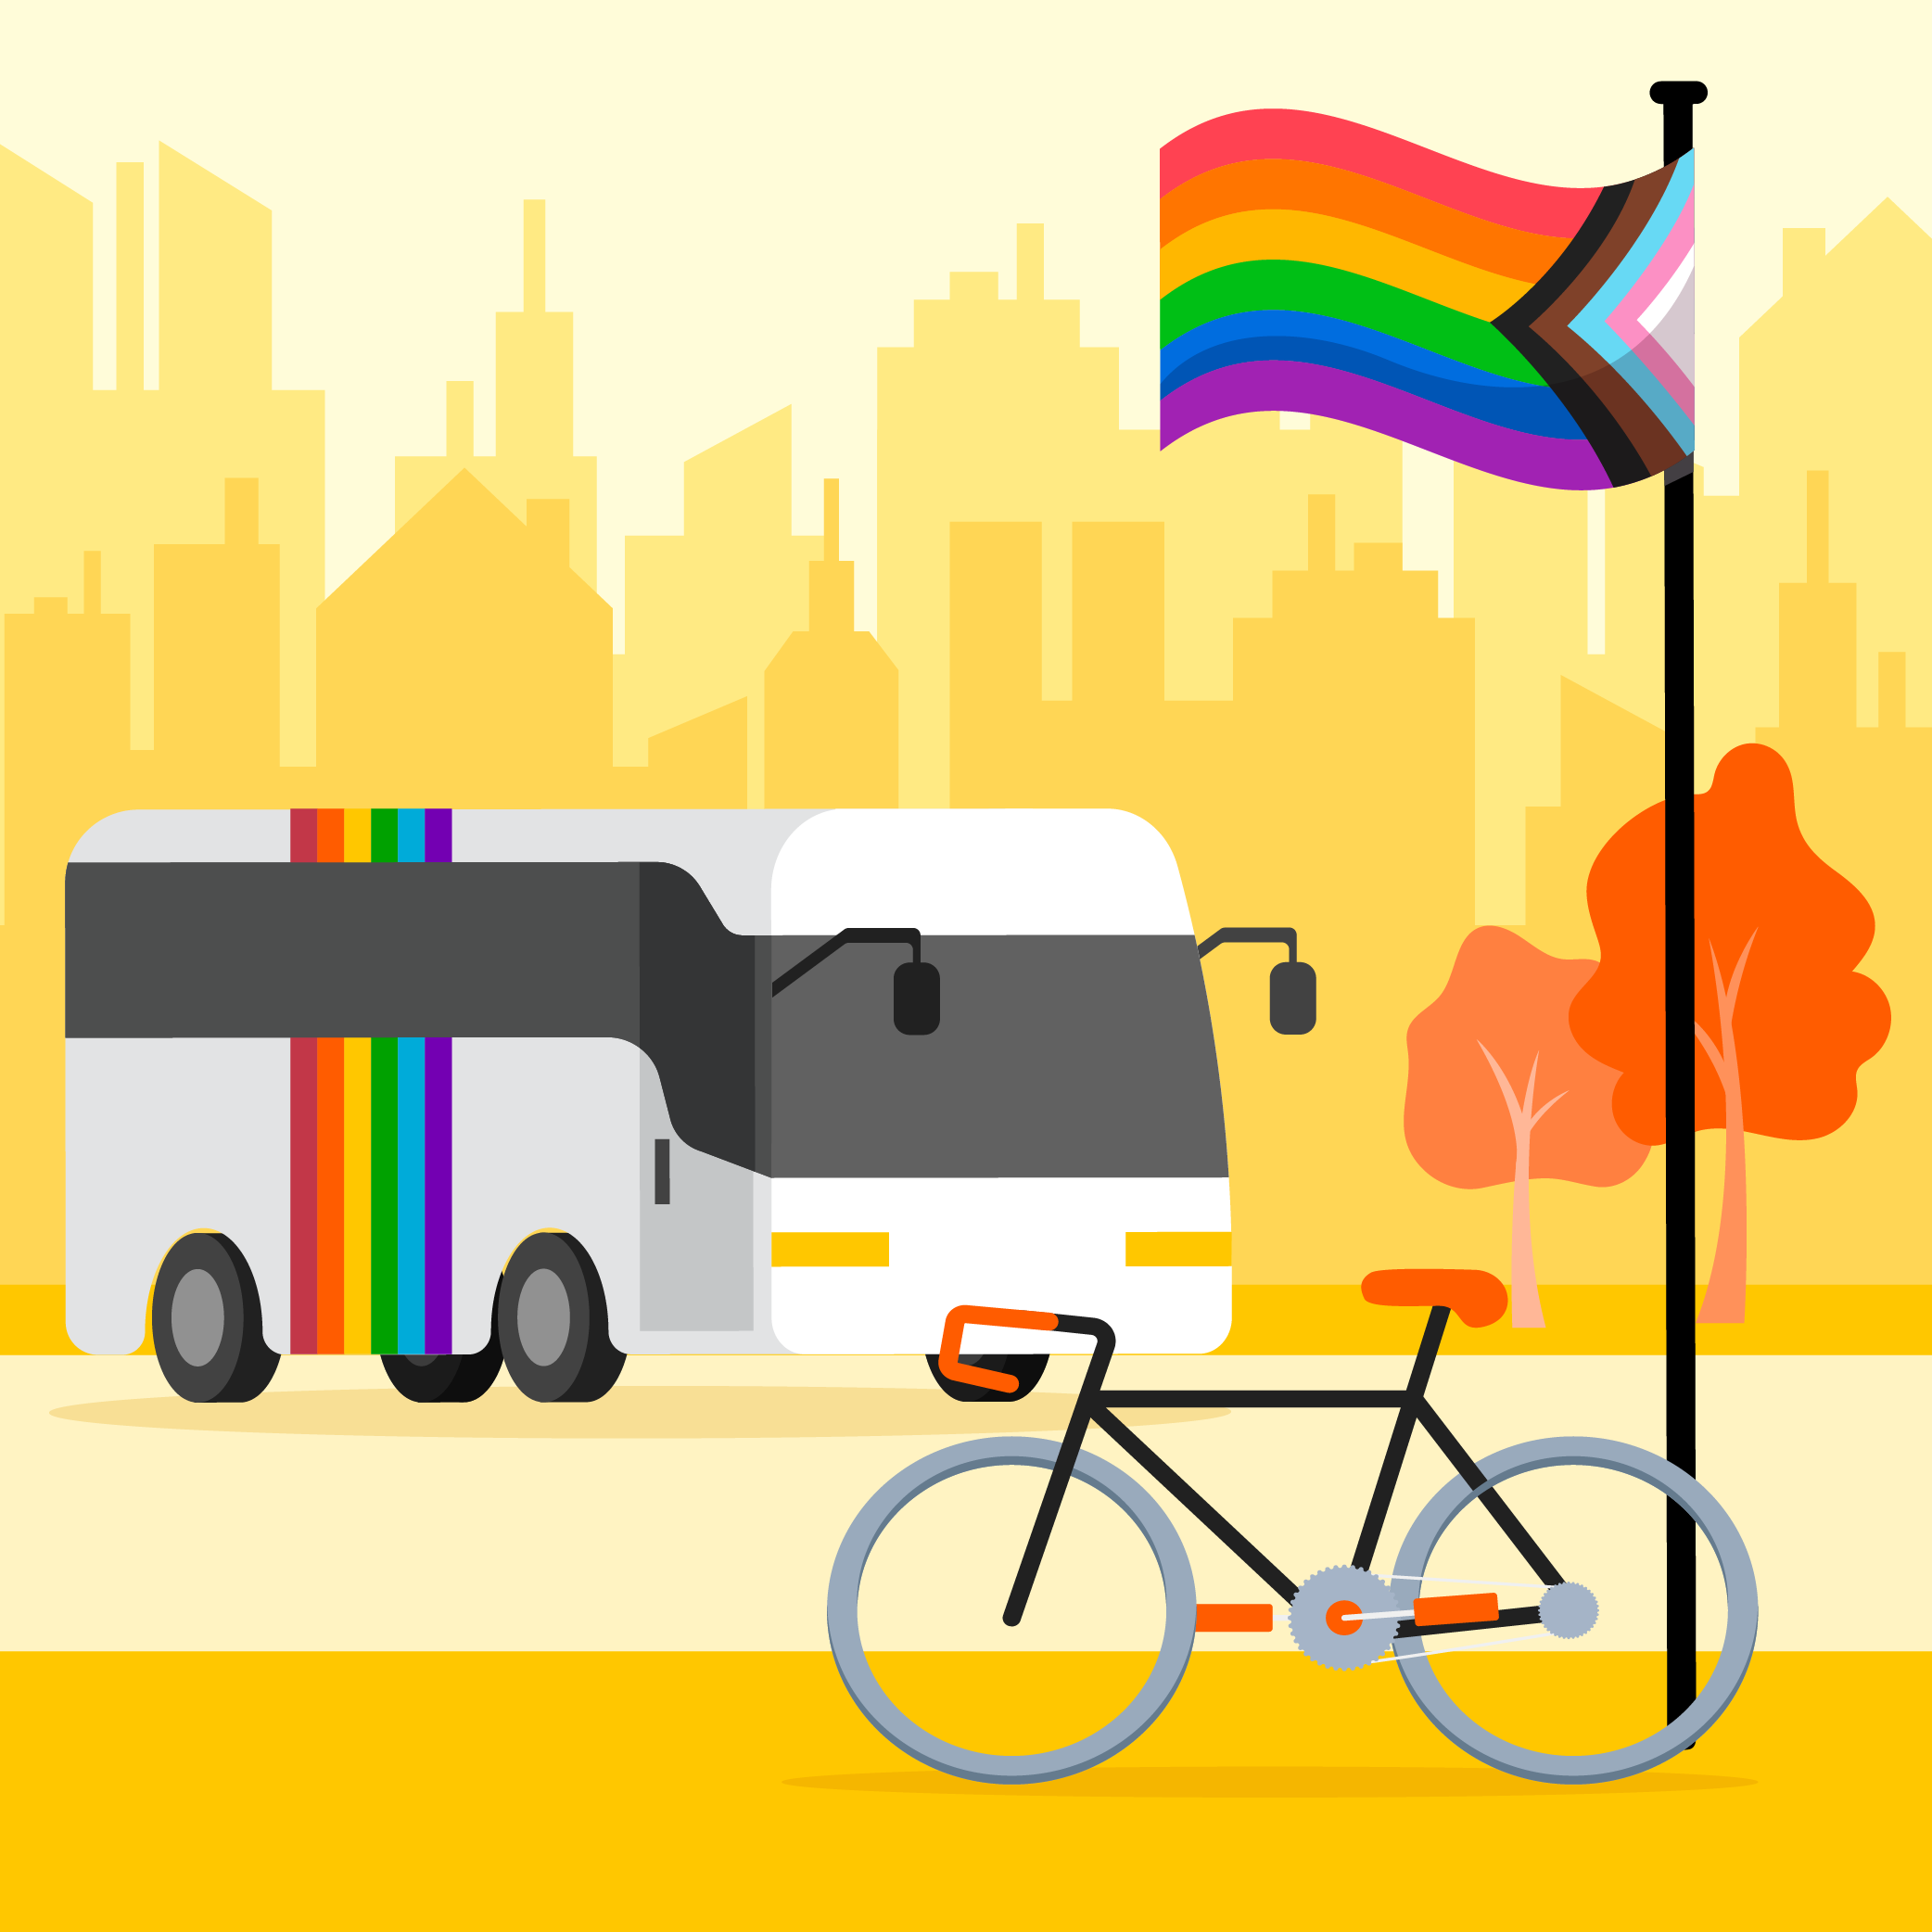 Pride Toronto Festival Location and Transportation